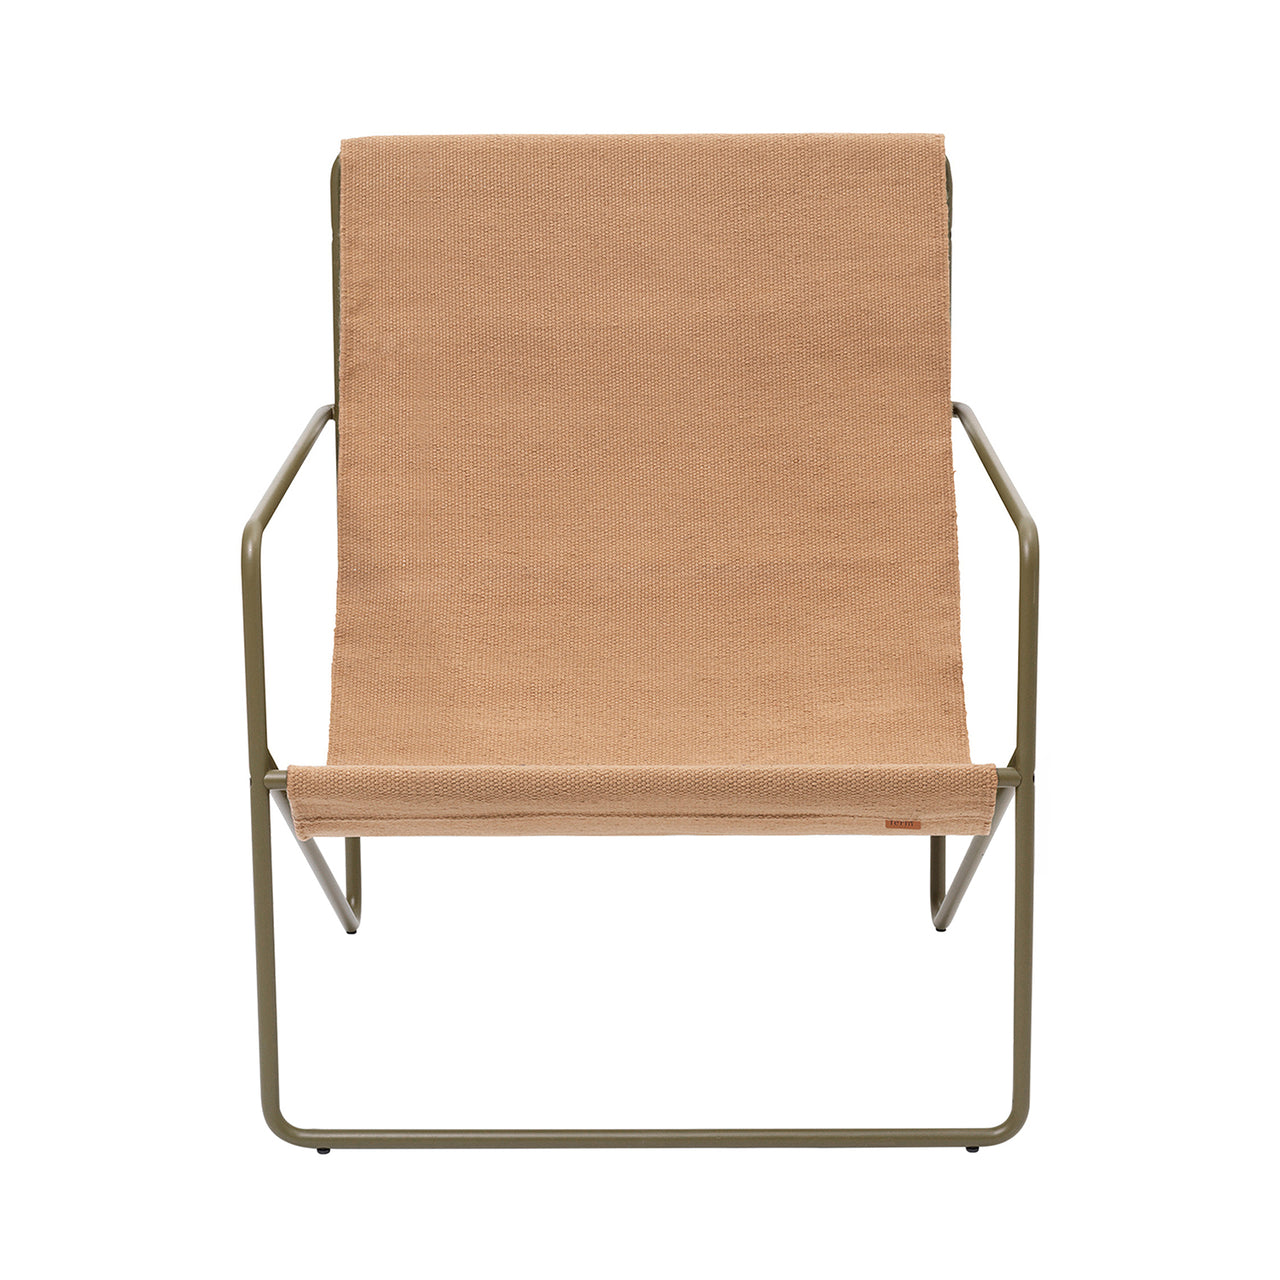 Desert Lounge Chair: Sand + Olive